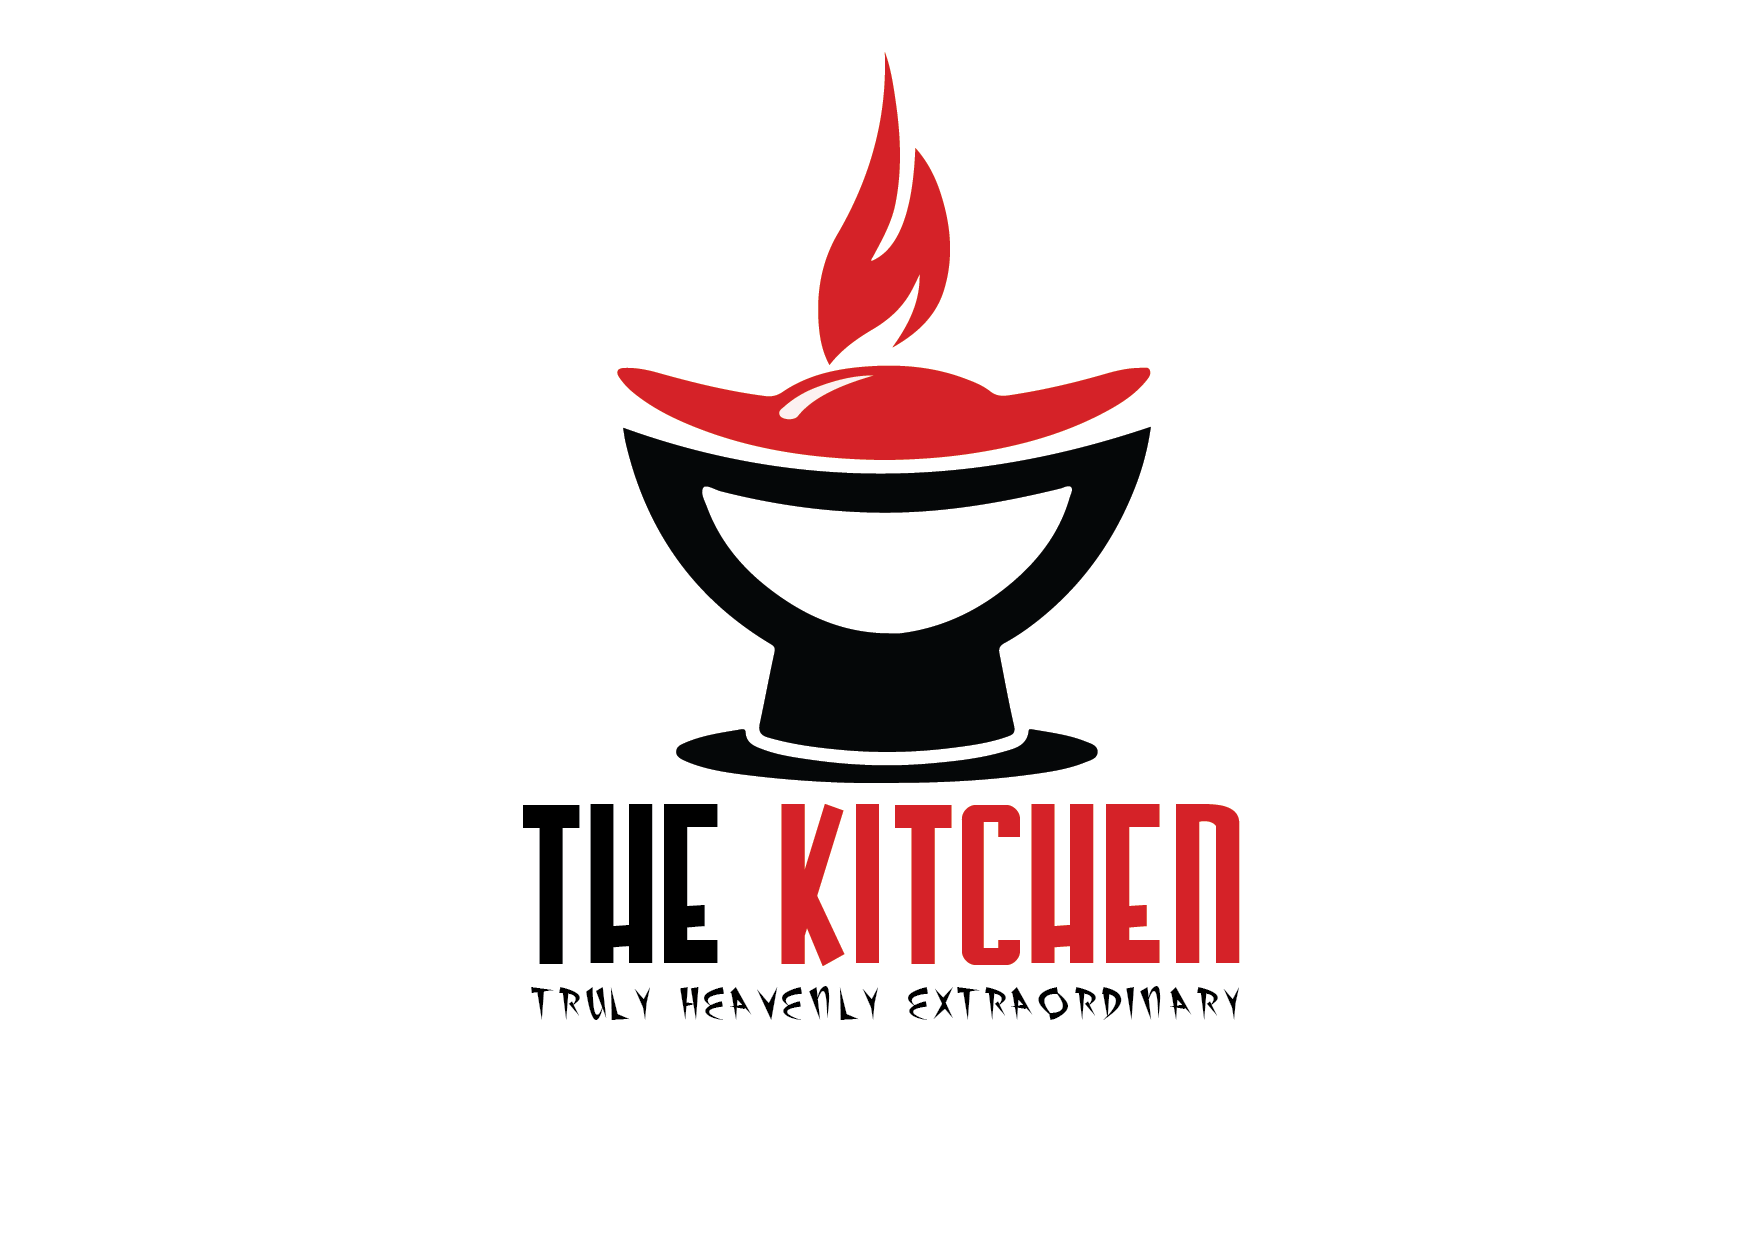 Restoran Logo - Sribu: Logo Design - logo untuk restoran seafood, suki, dan